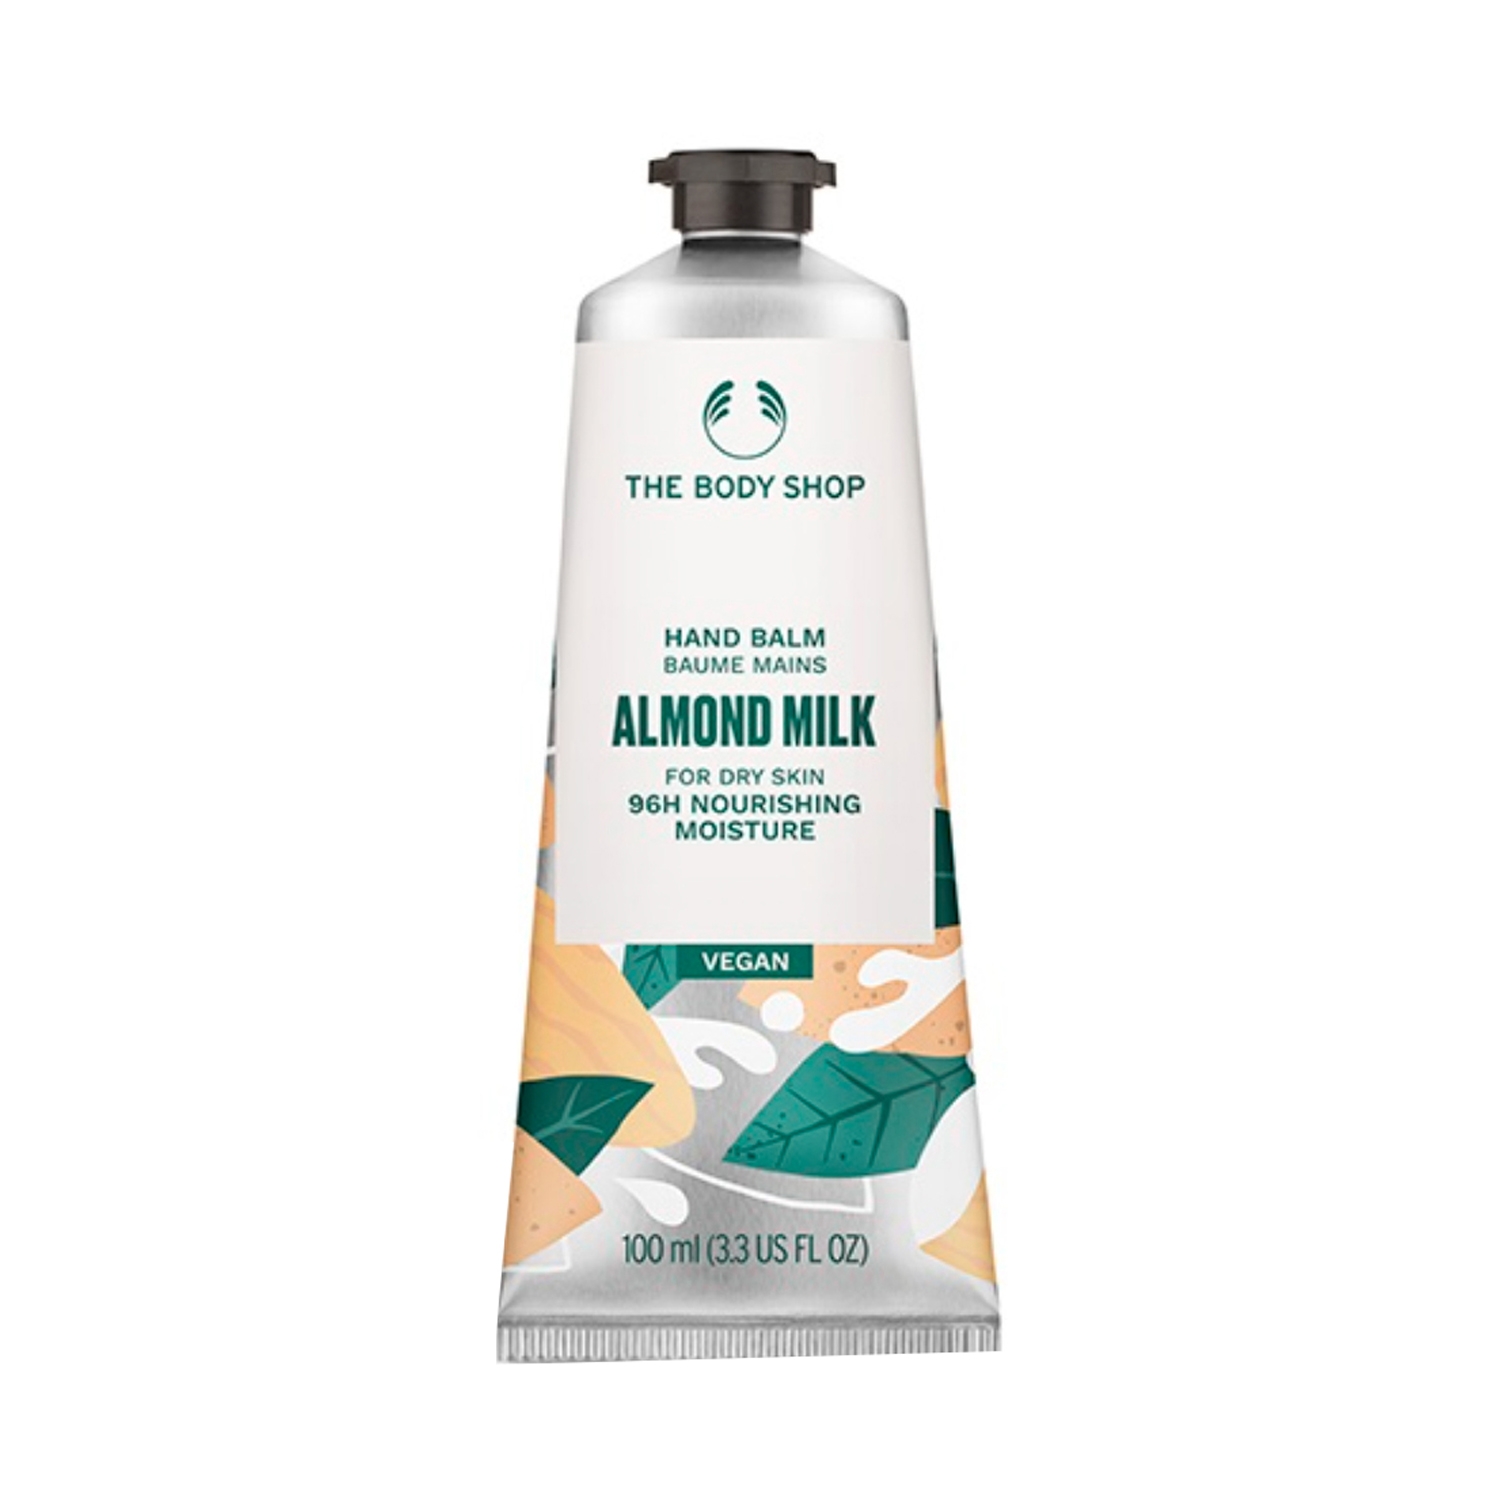 The Body Shop | The Body Shop Almond Milk Hand Balm (100ml)